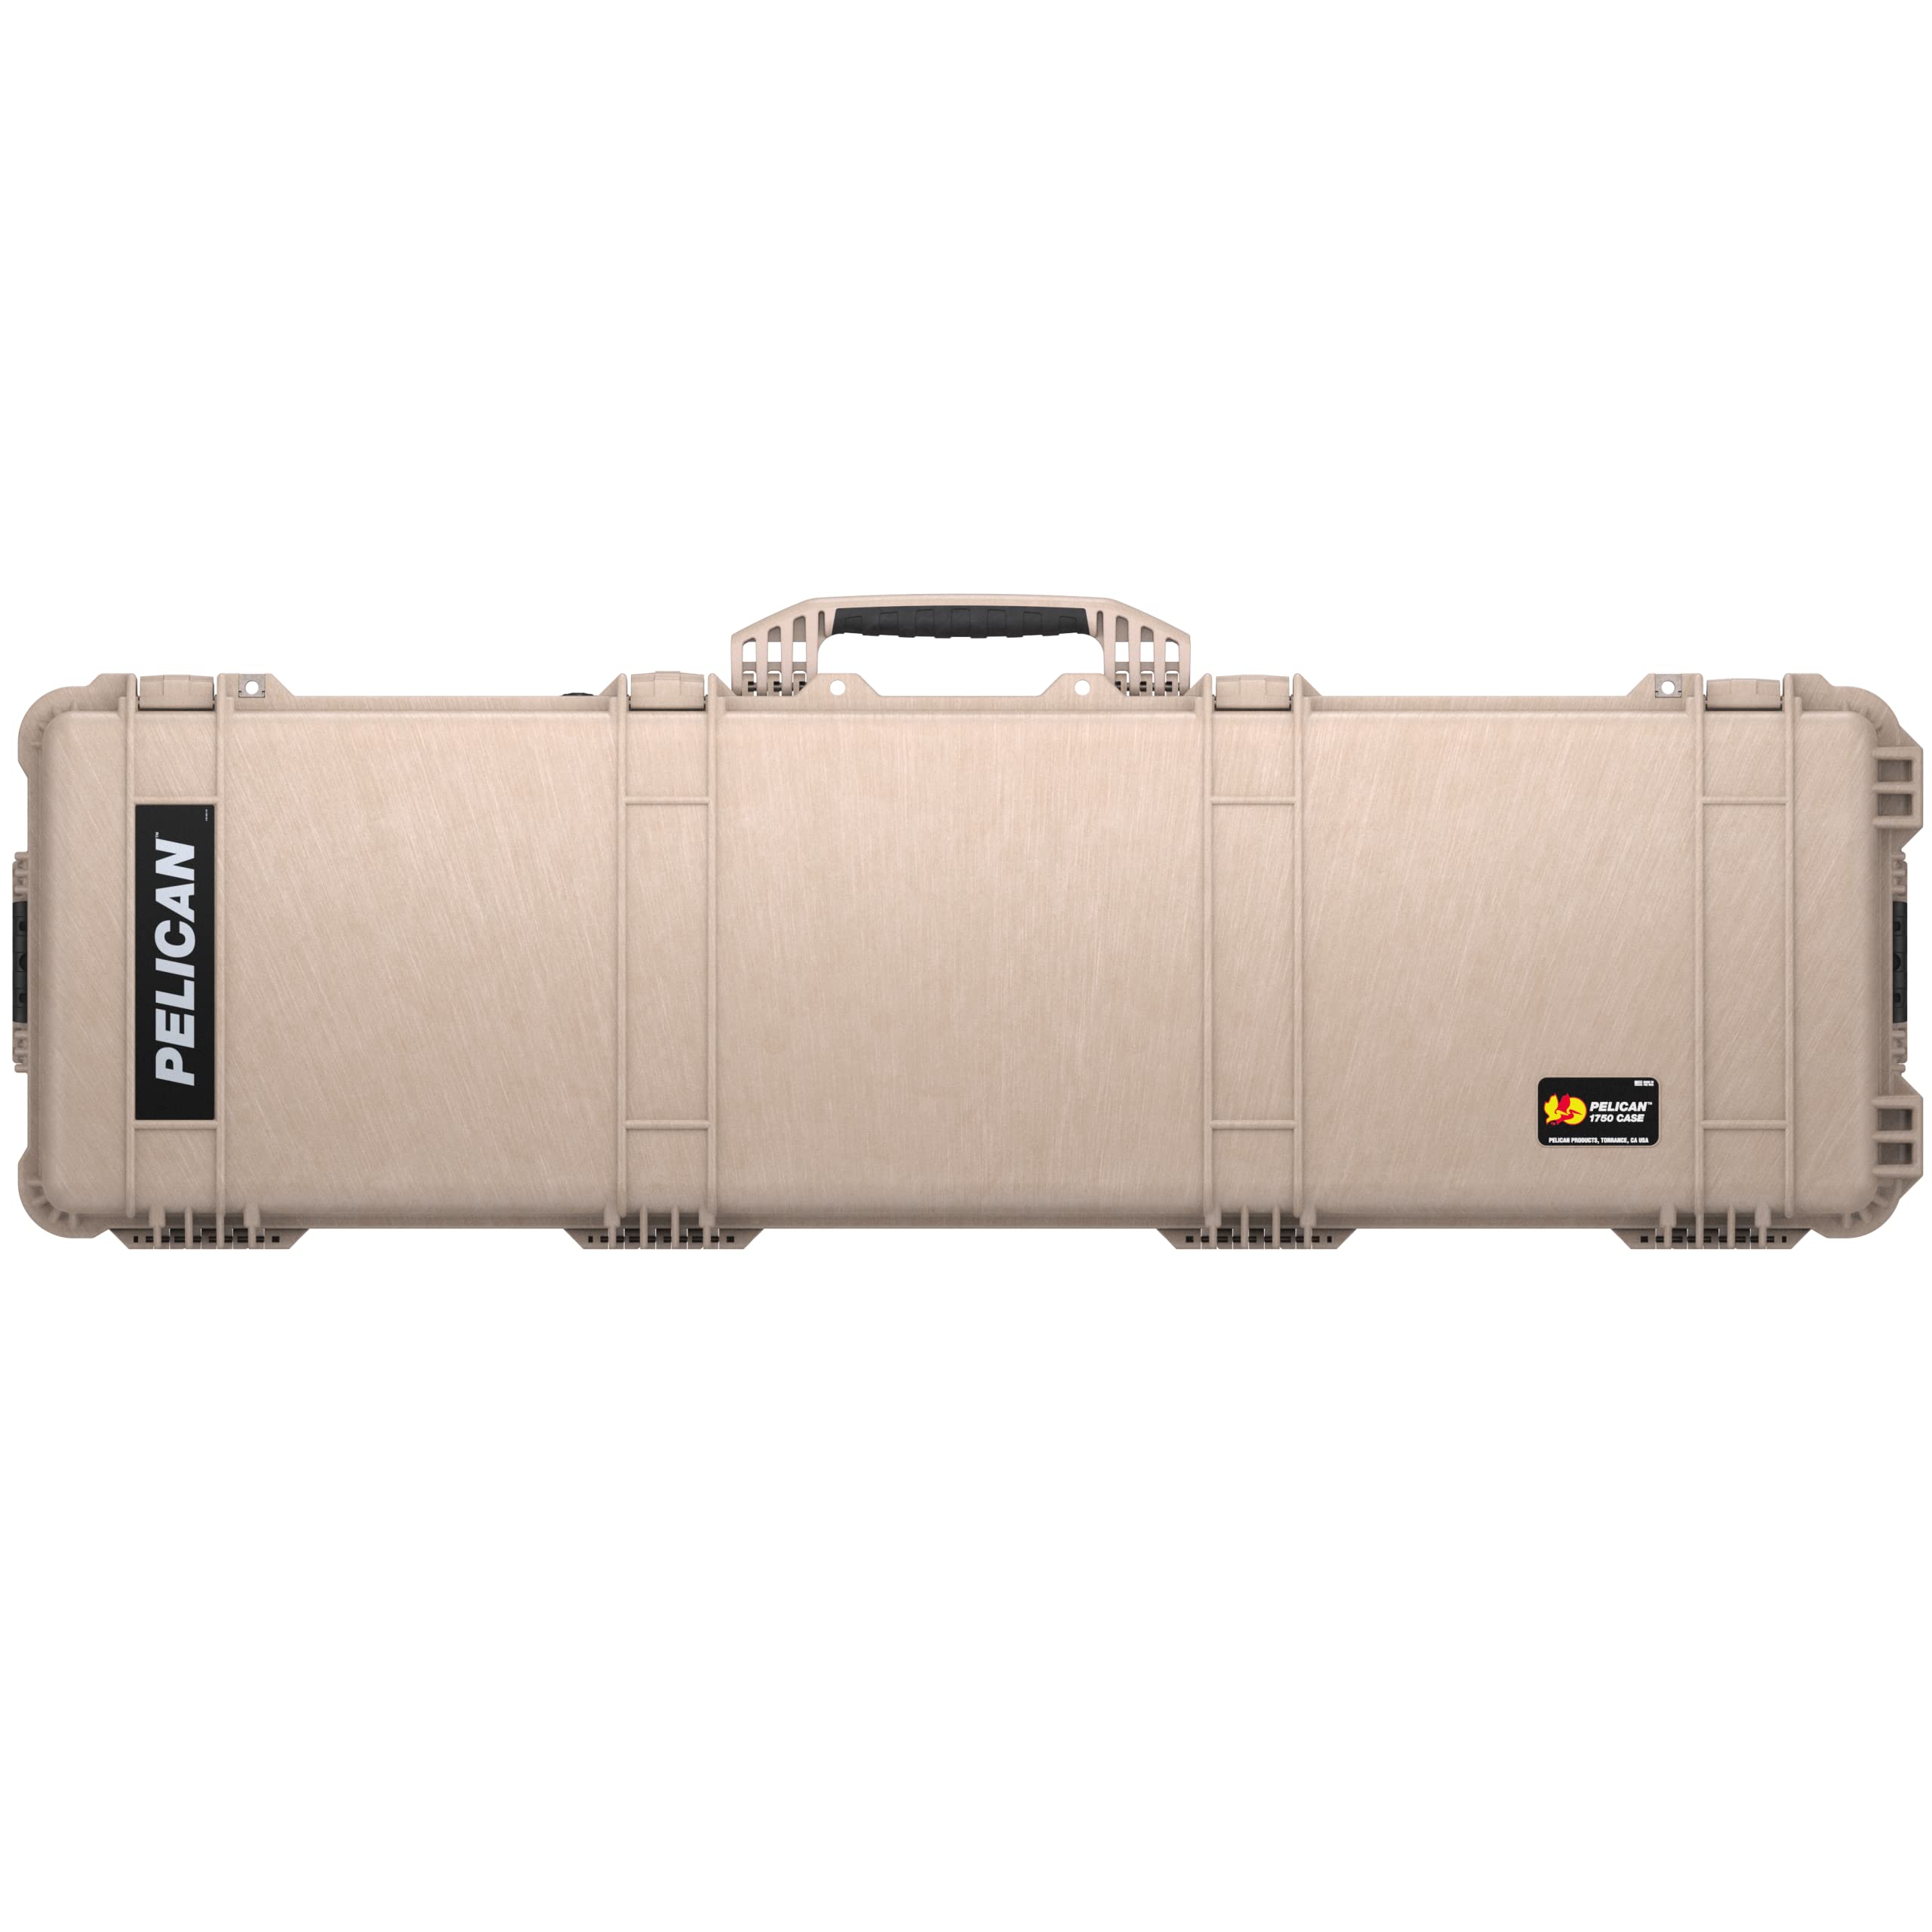 Pelican Protector 1750 Long Case - Multi-Purpose Hard Case with Foam - Tripod, Camera Equipment, Sportsmans Rifle Case, Electronics Gear, and More (Desert Tan)